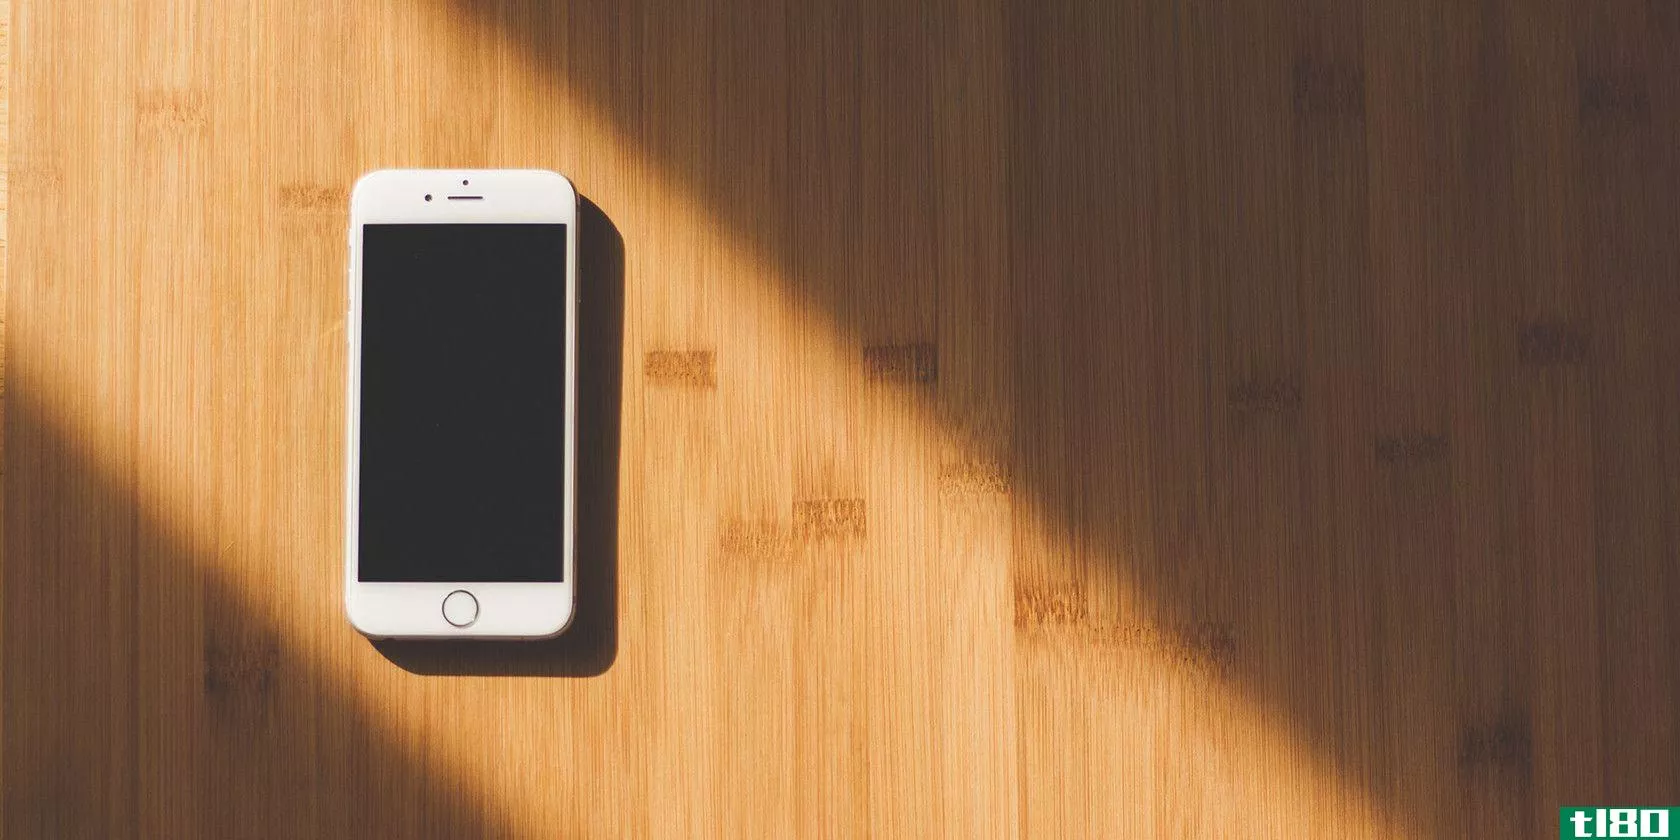 iphone-dark-light-wood-featured